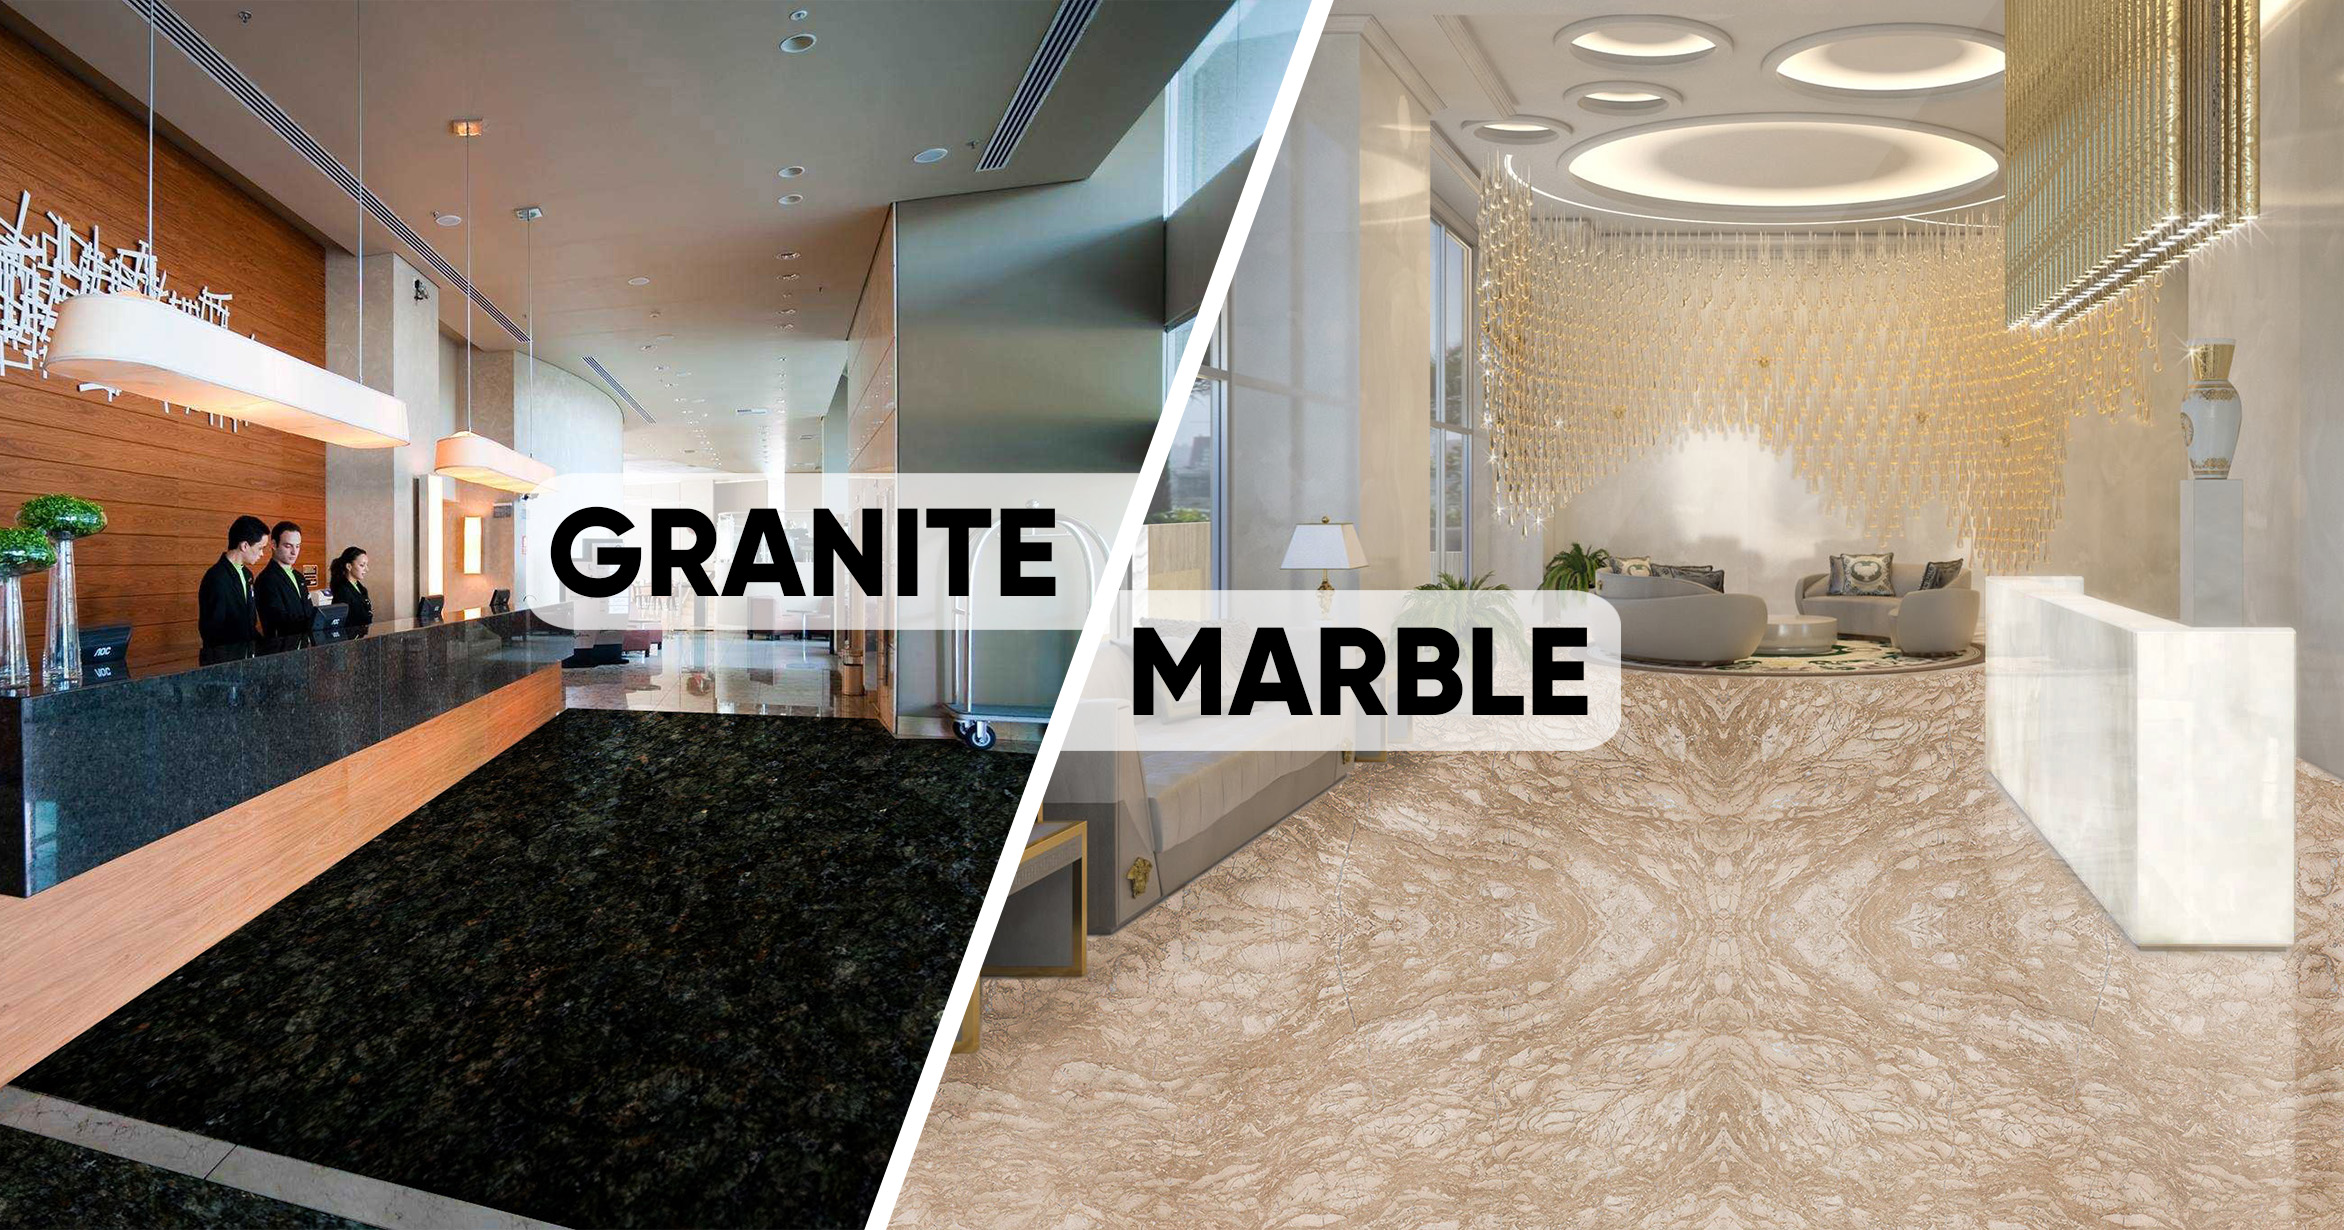 Granite or Marble: The Easy Guide to Choosing Between Granite and Marble